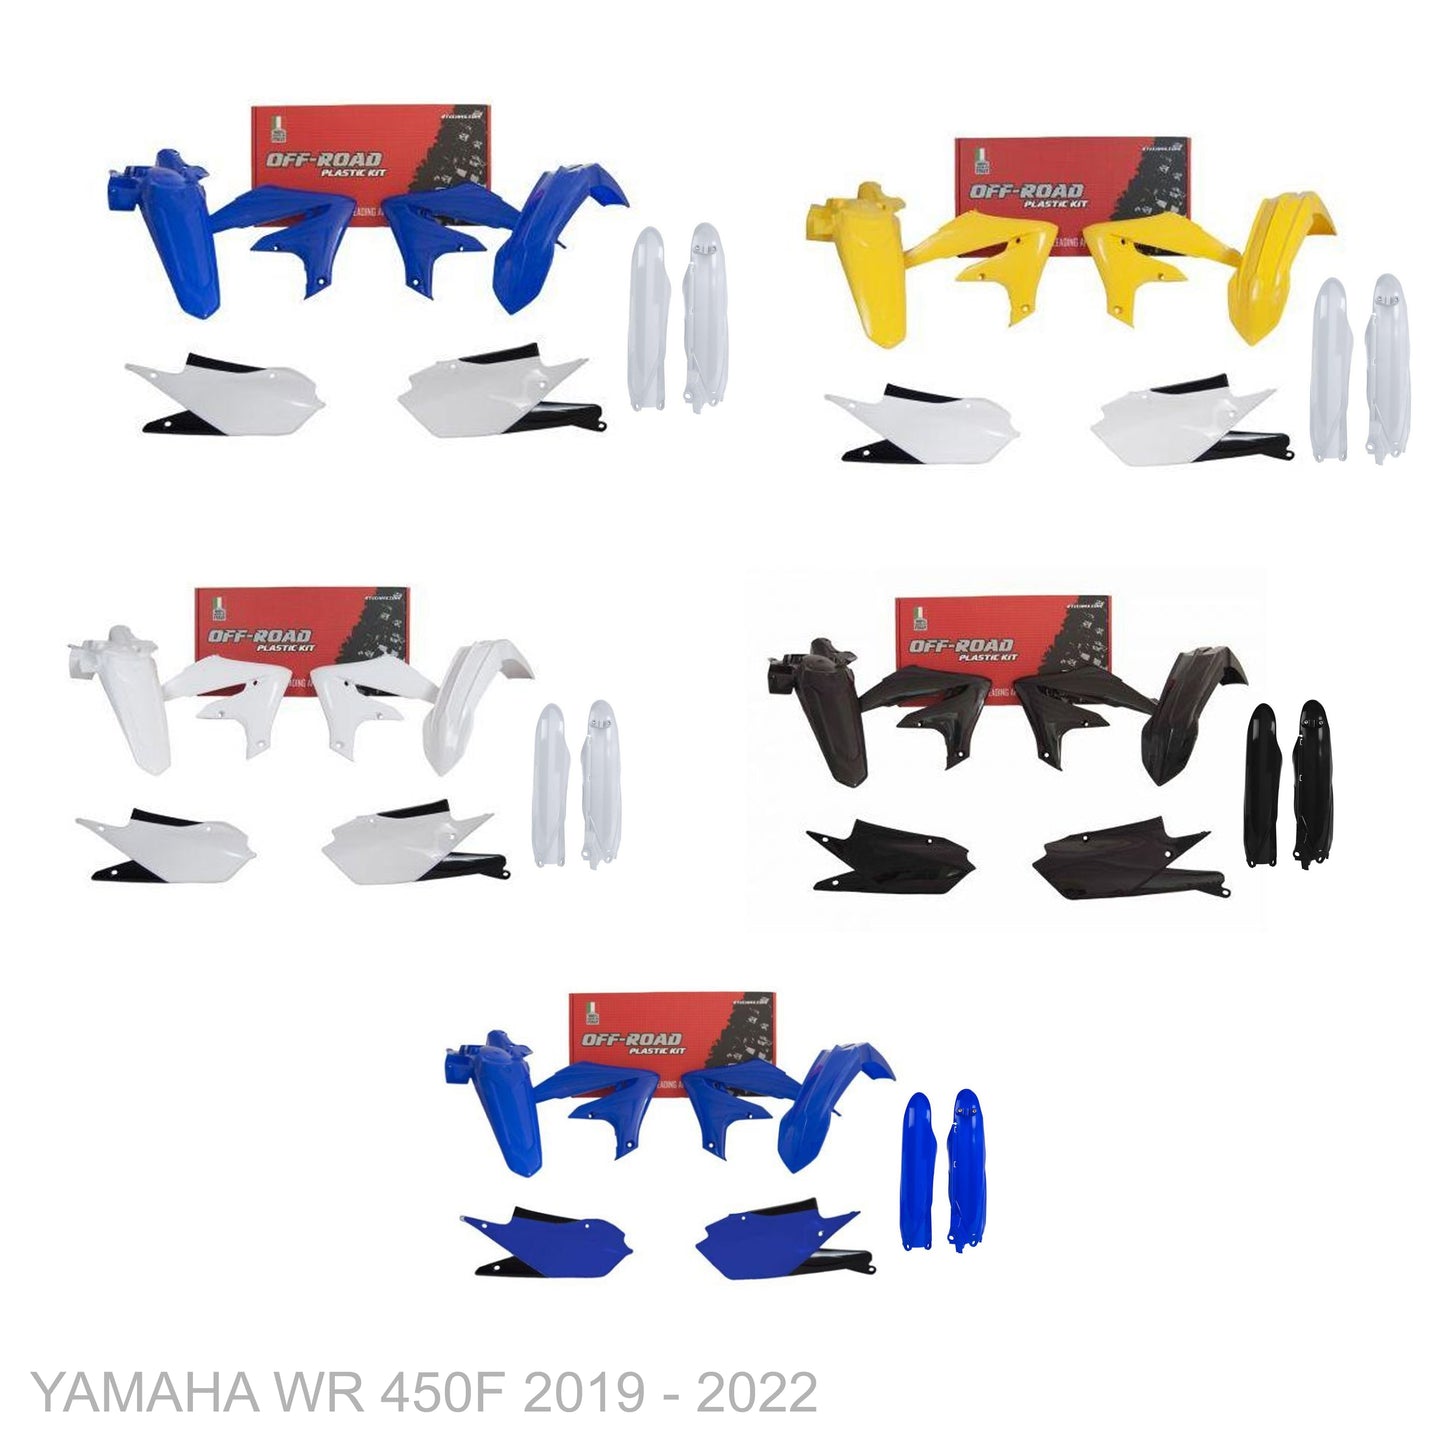 YAMAHA WR 450F 2019 - 2022 Start From Scratch Graphics Kits